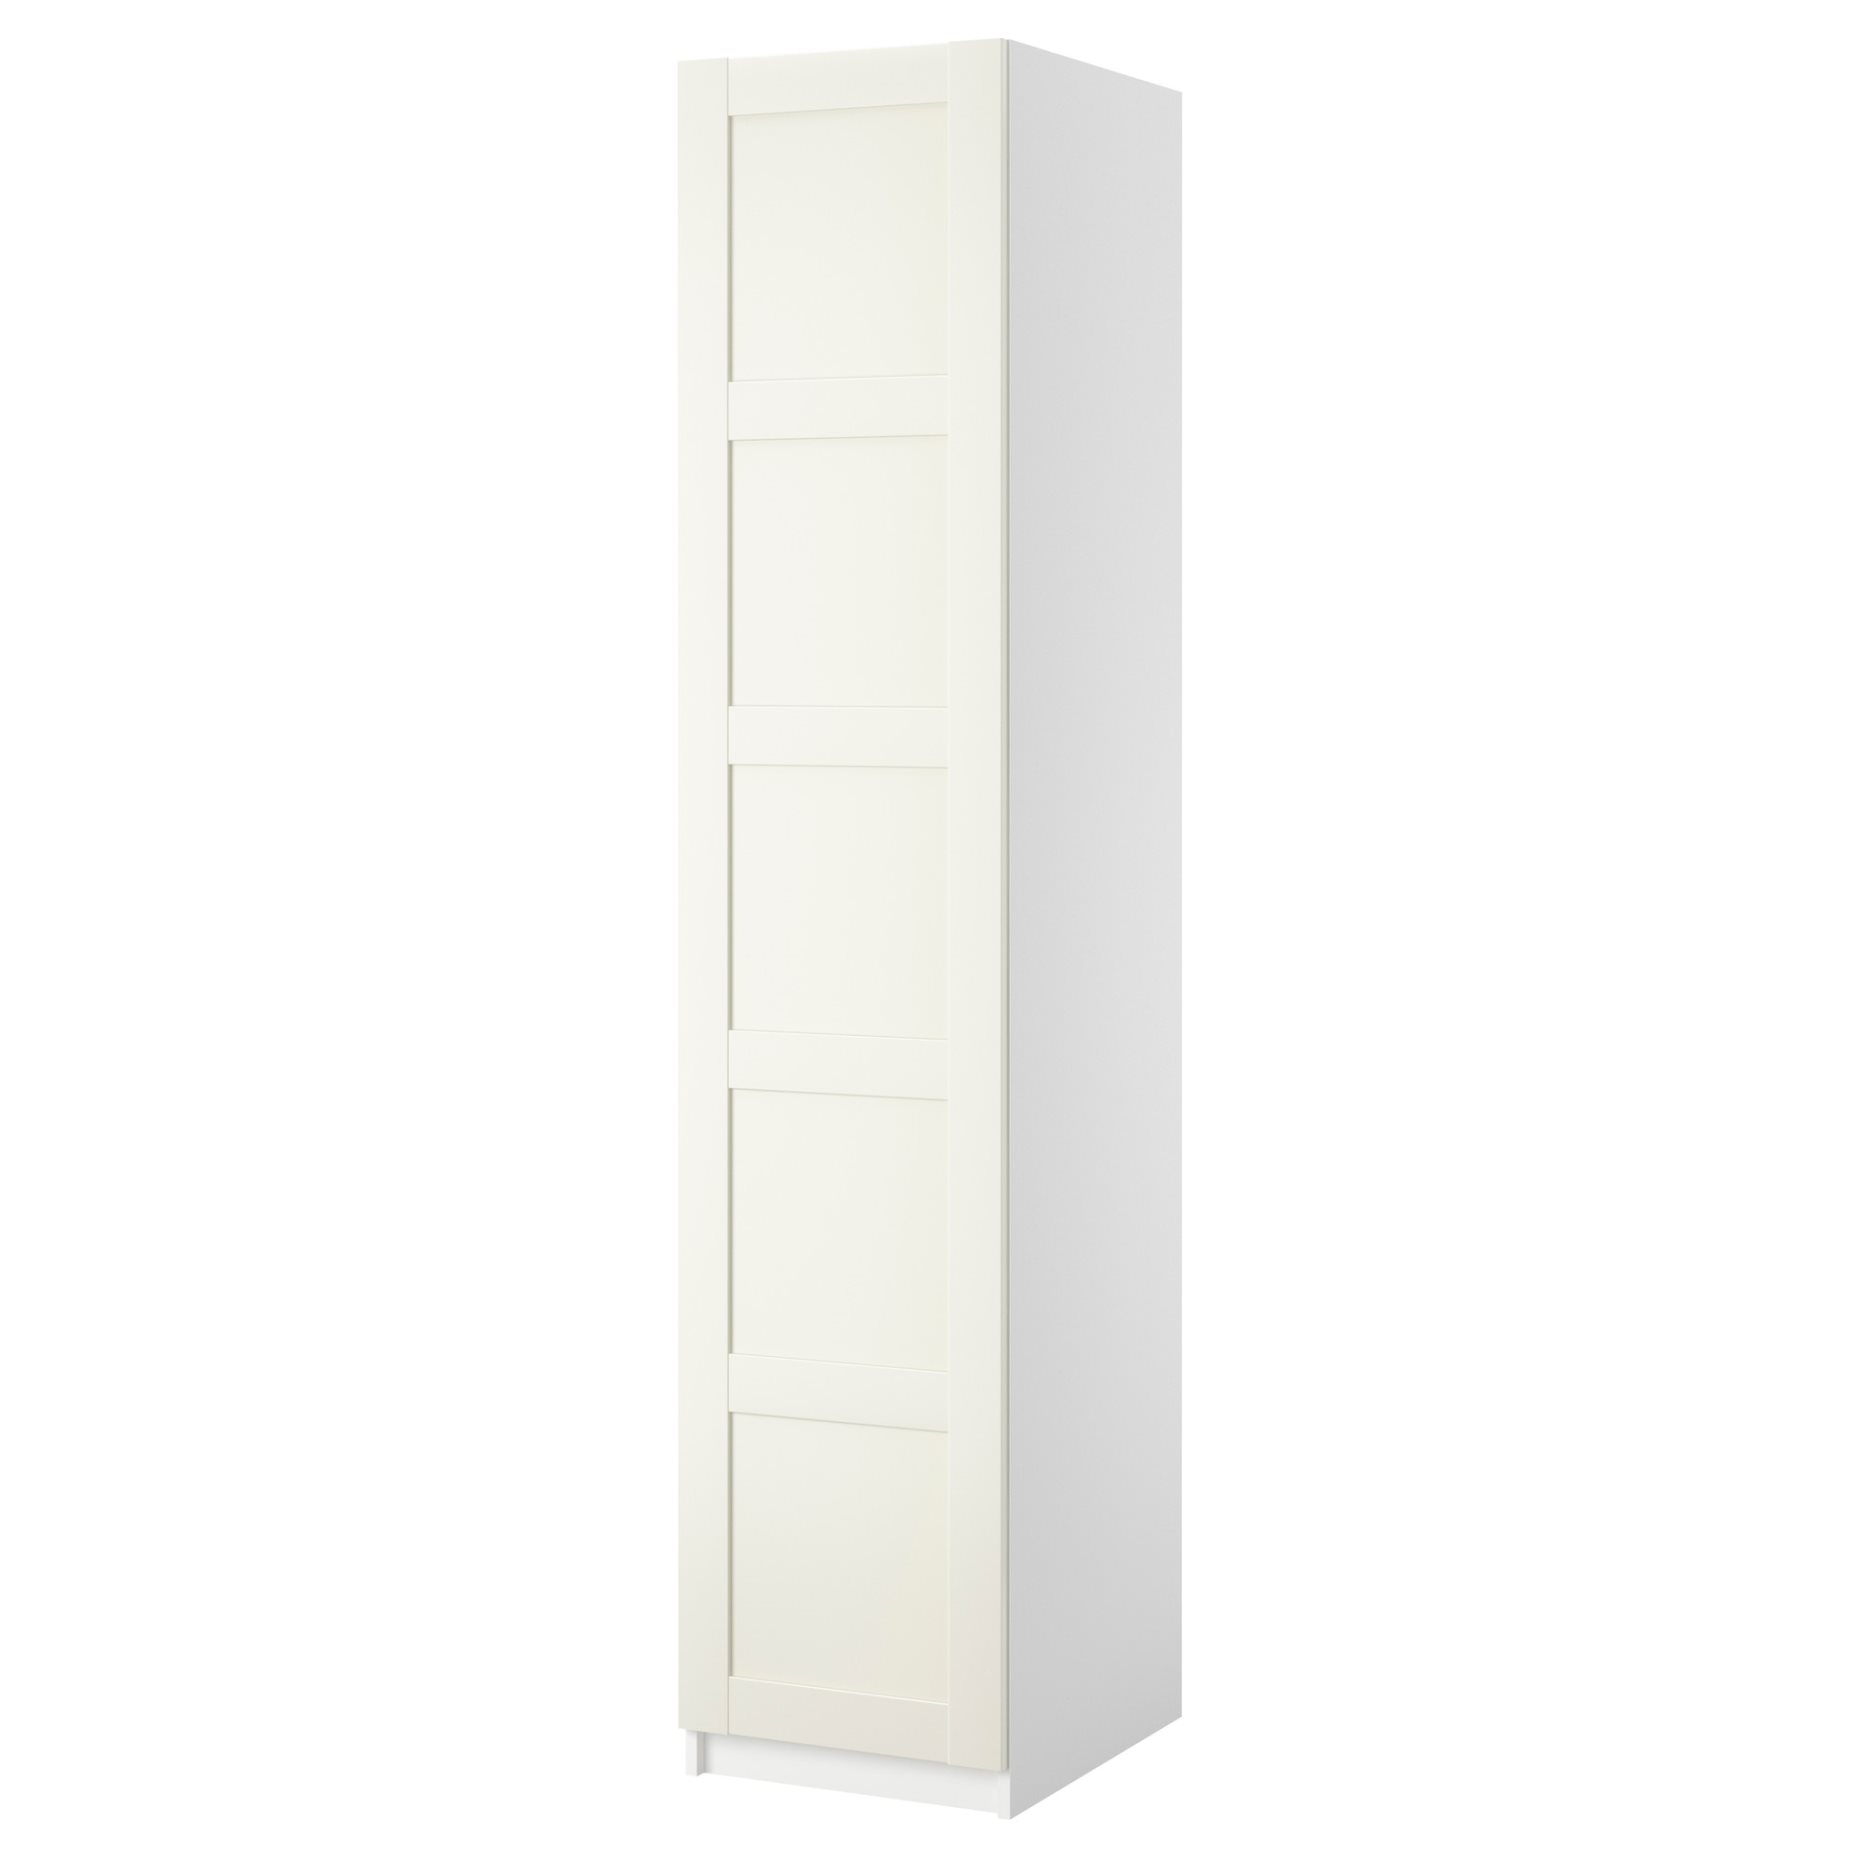 PAX, ντουλάπα με 1 πόρτα, 50X60X236 cm, 490.054.83